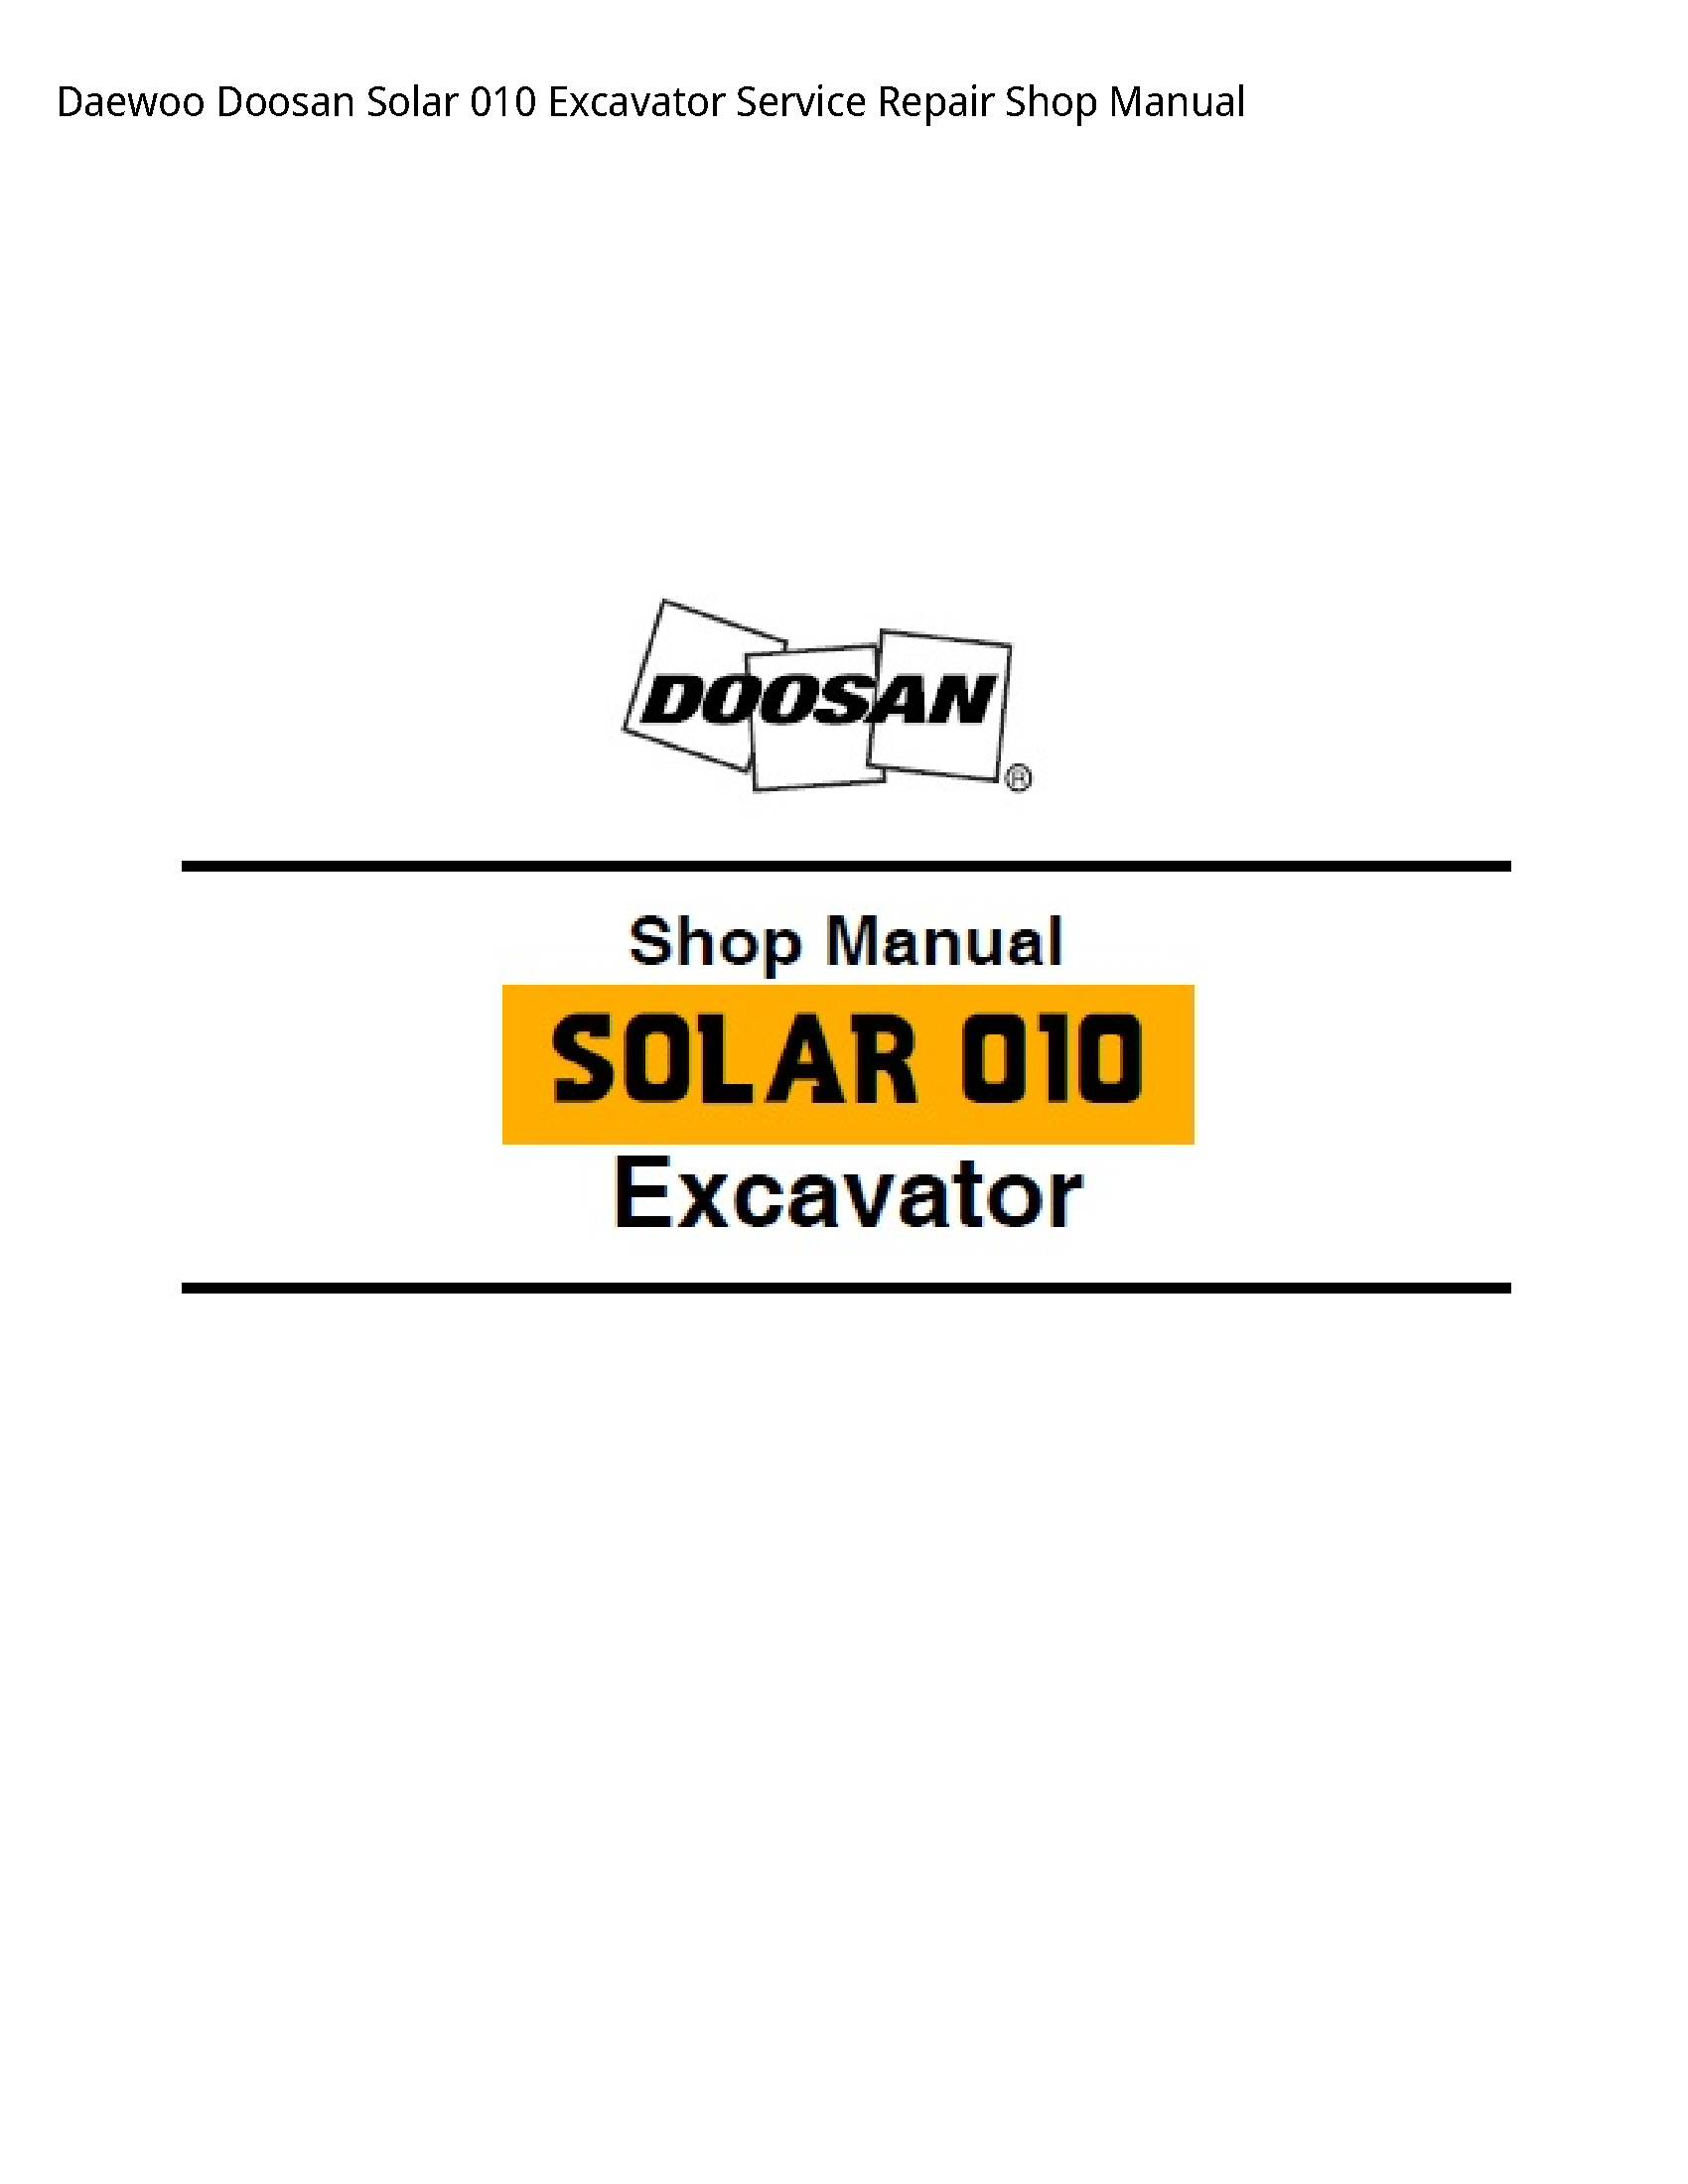 Daewoo Doosan 010 Solar Excavator manual